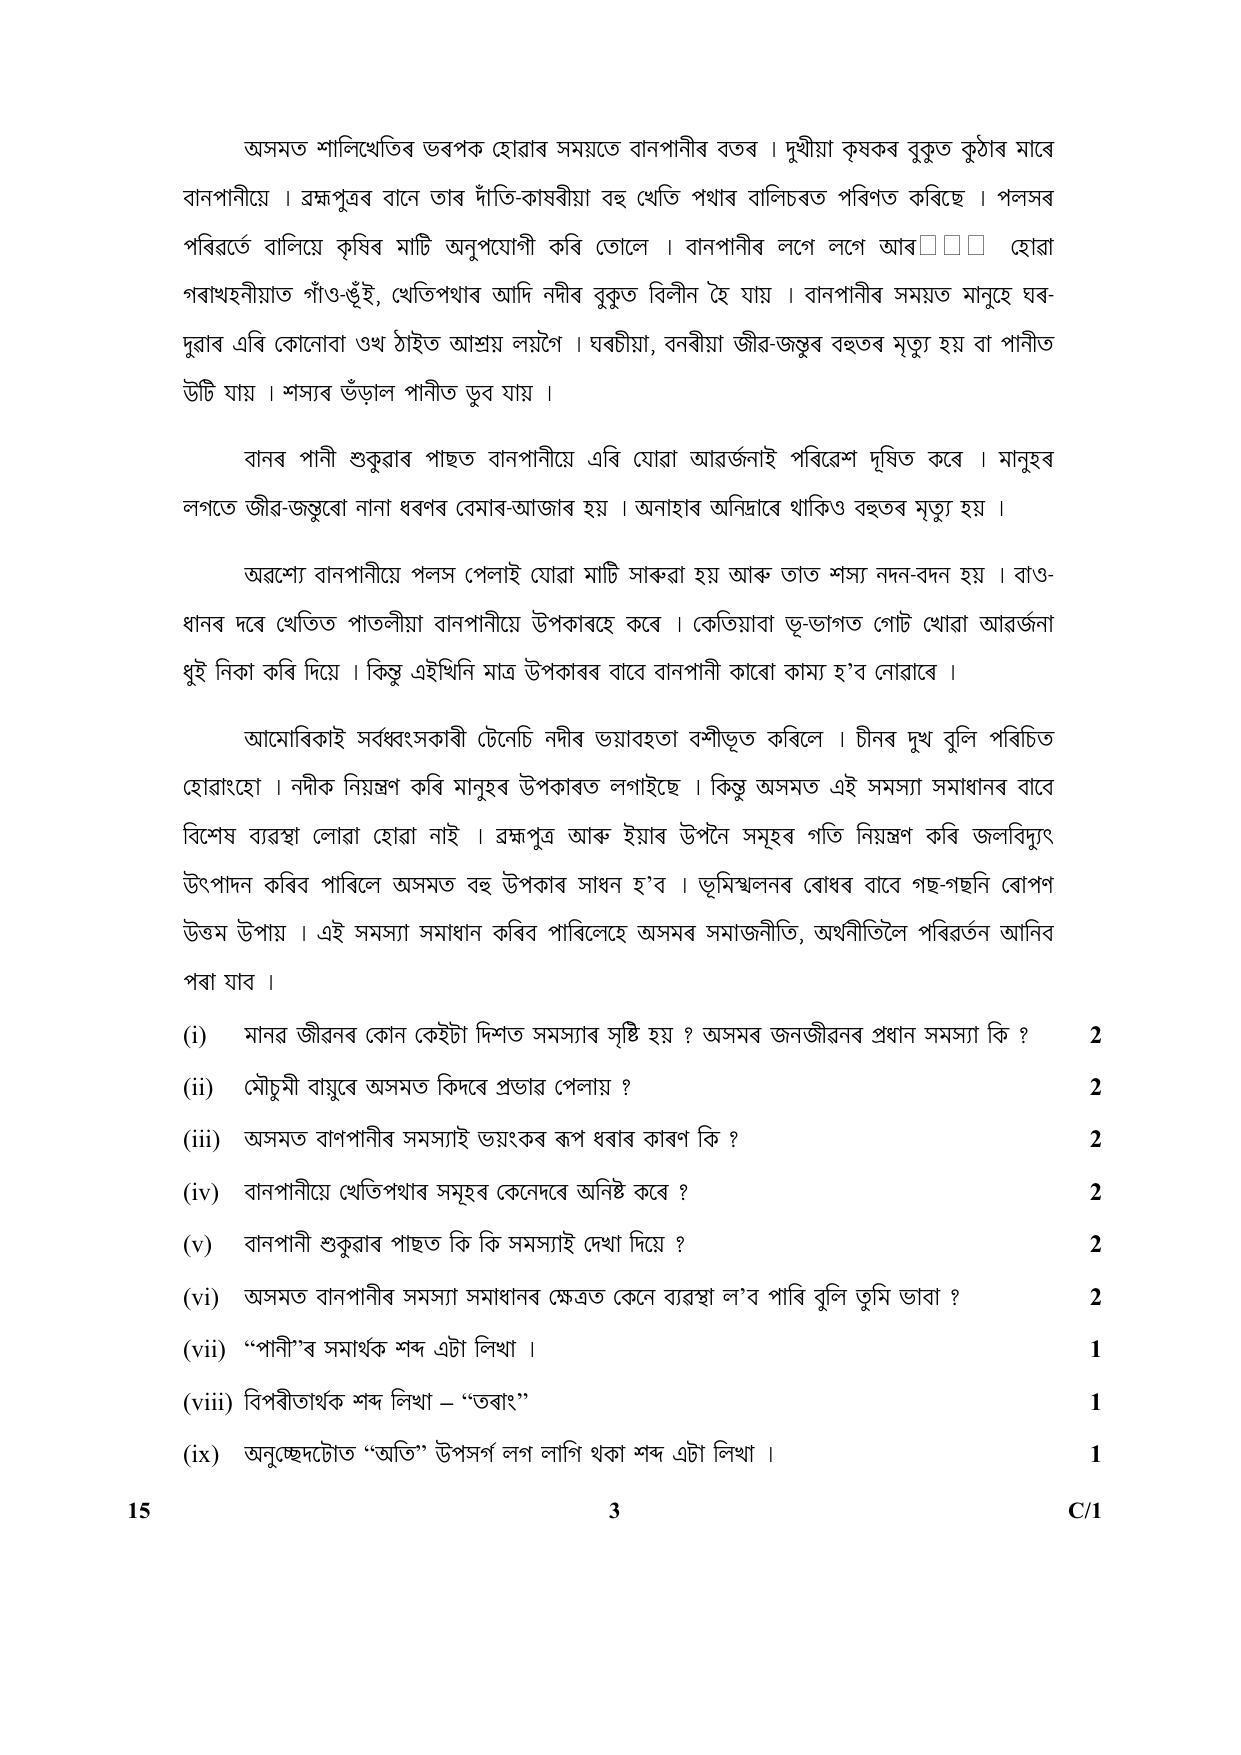 CBSE Class 10 15 (Assamese) 2018 Compartment Question Paper - Page 3